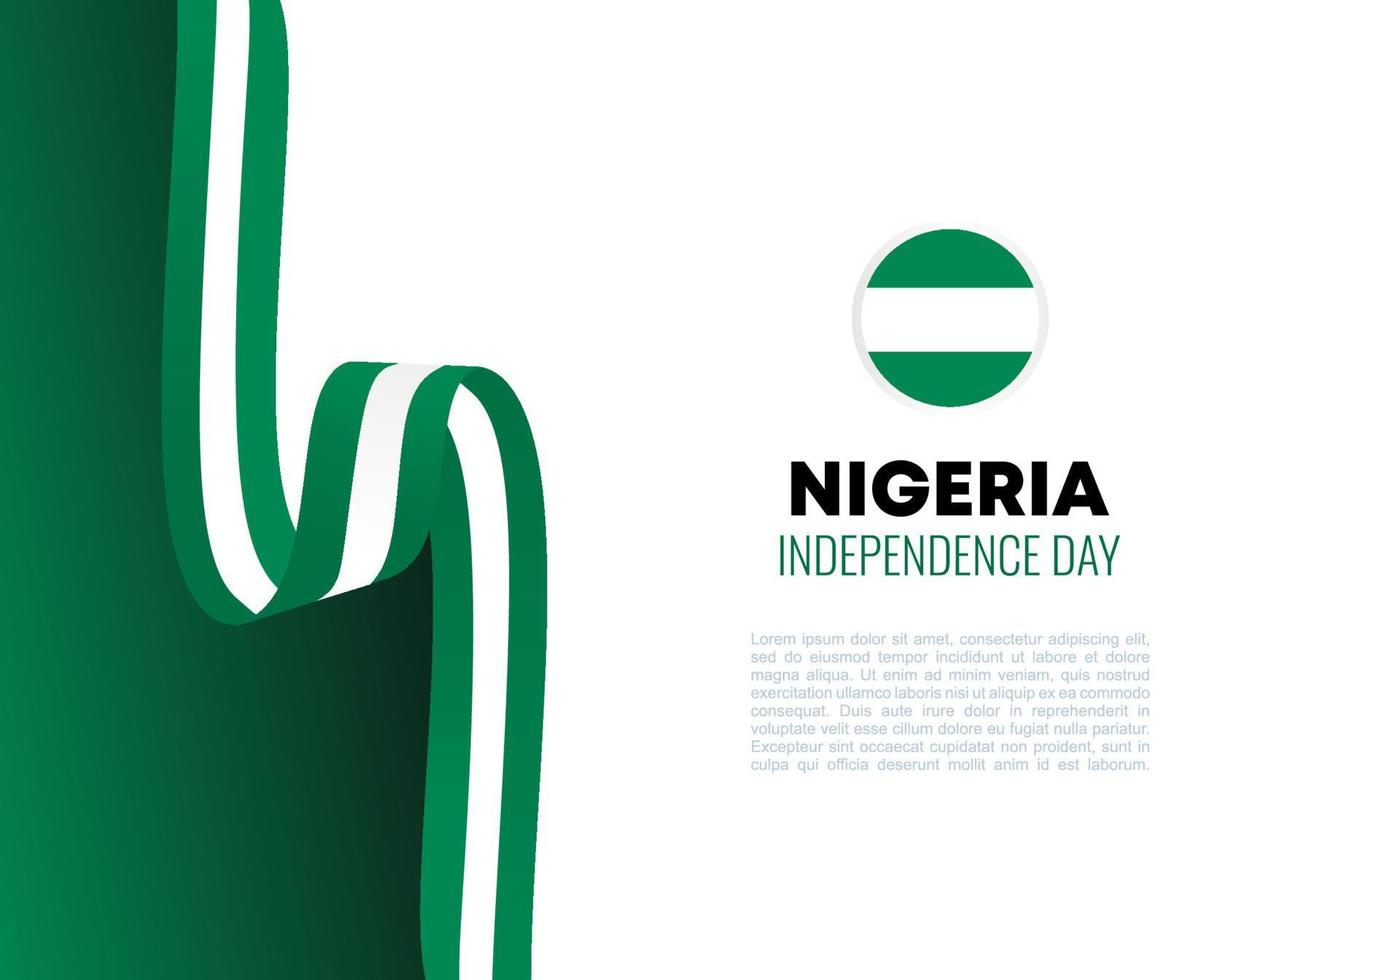 Nigeria independence day background for celebration on October 1st. vector